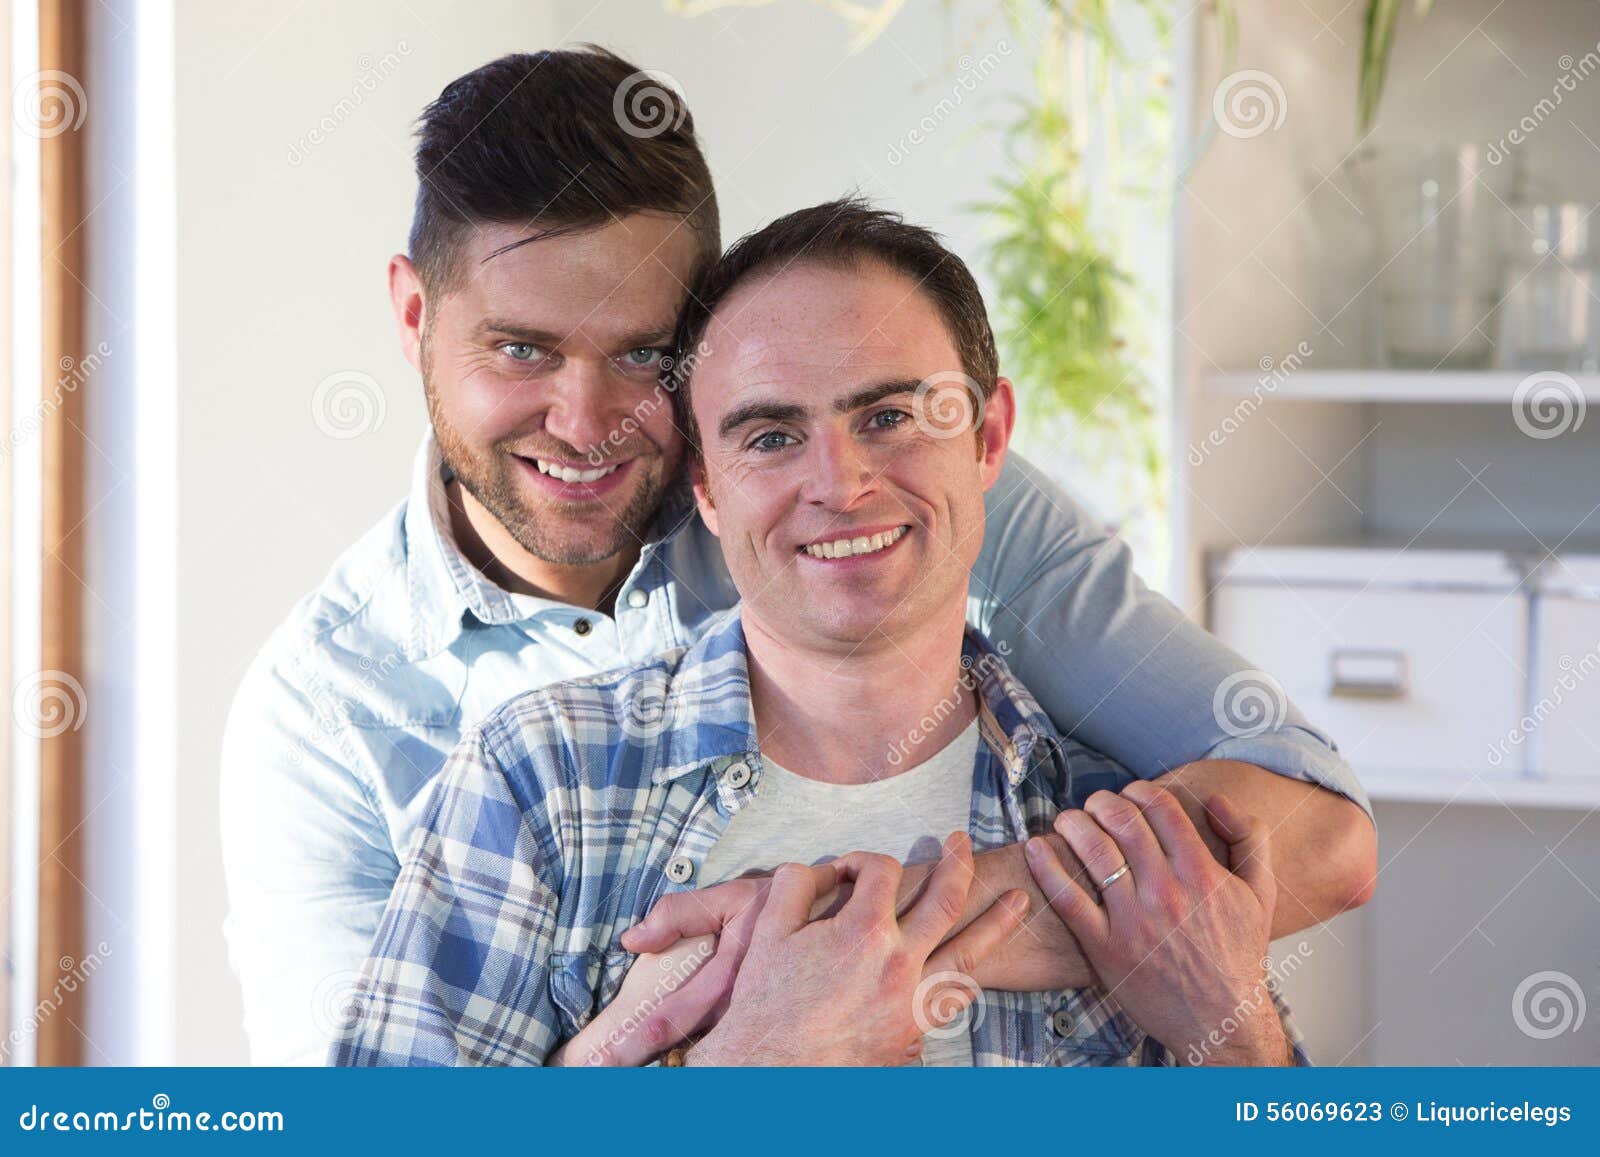 Same sex couple at home stock image image